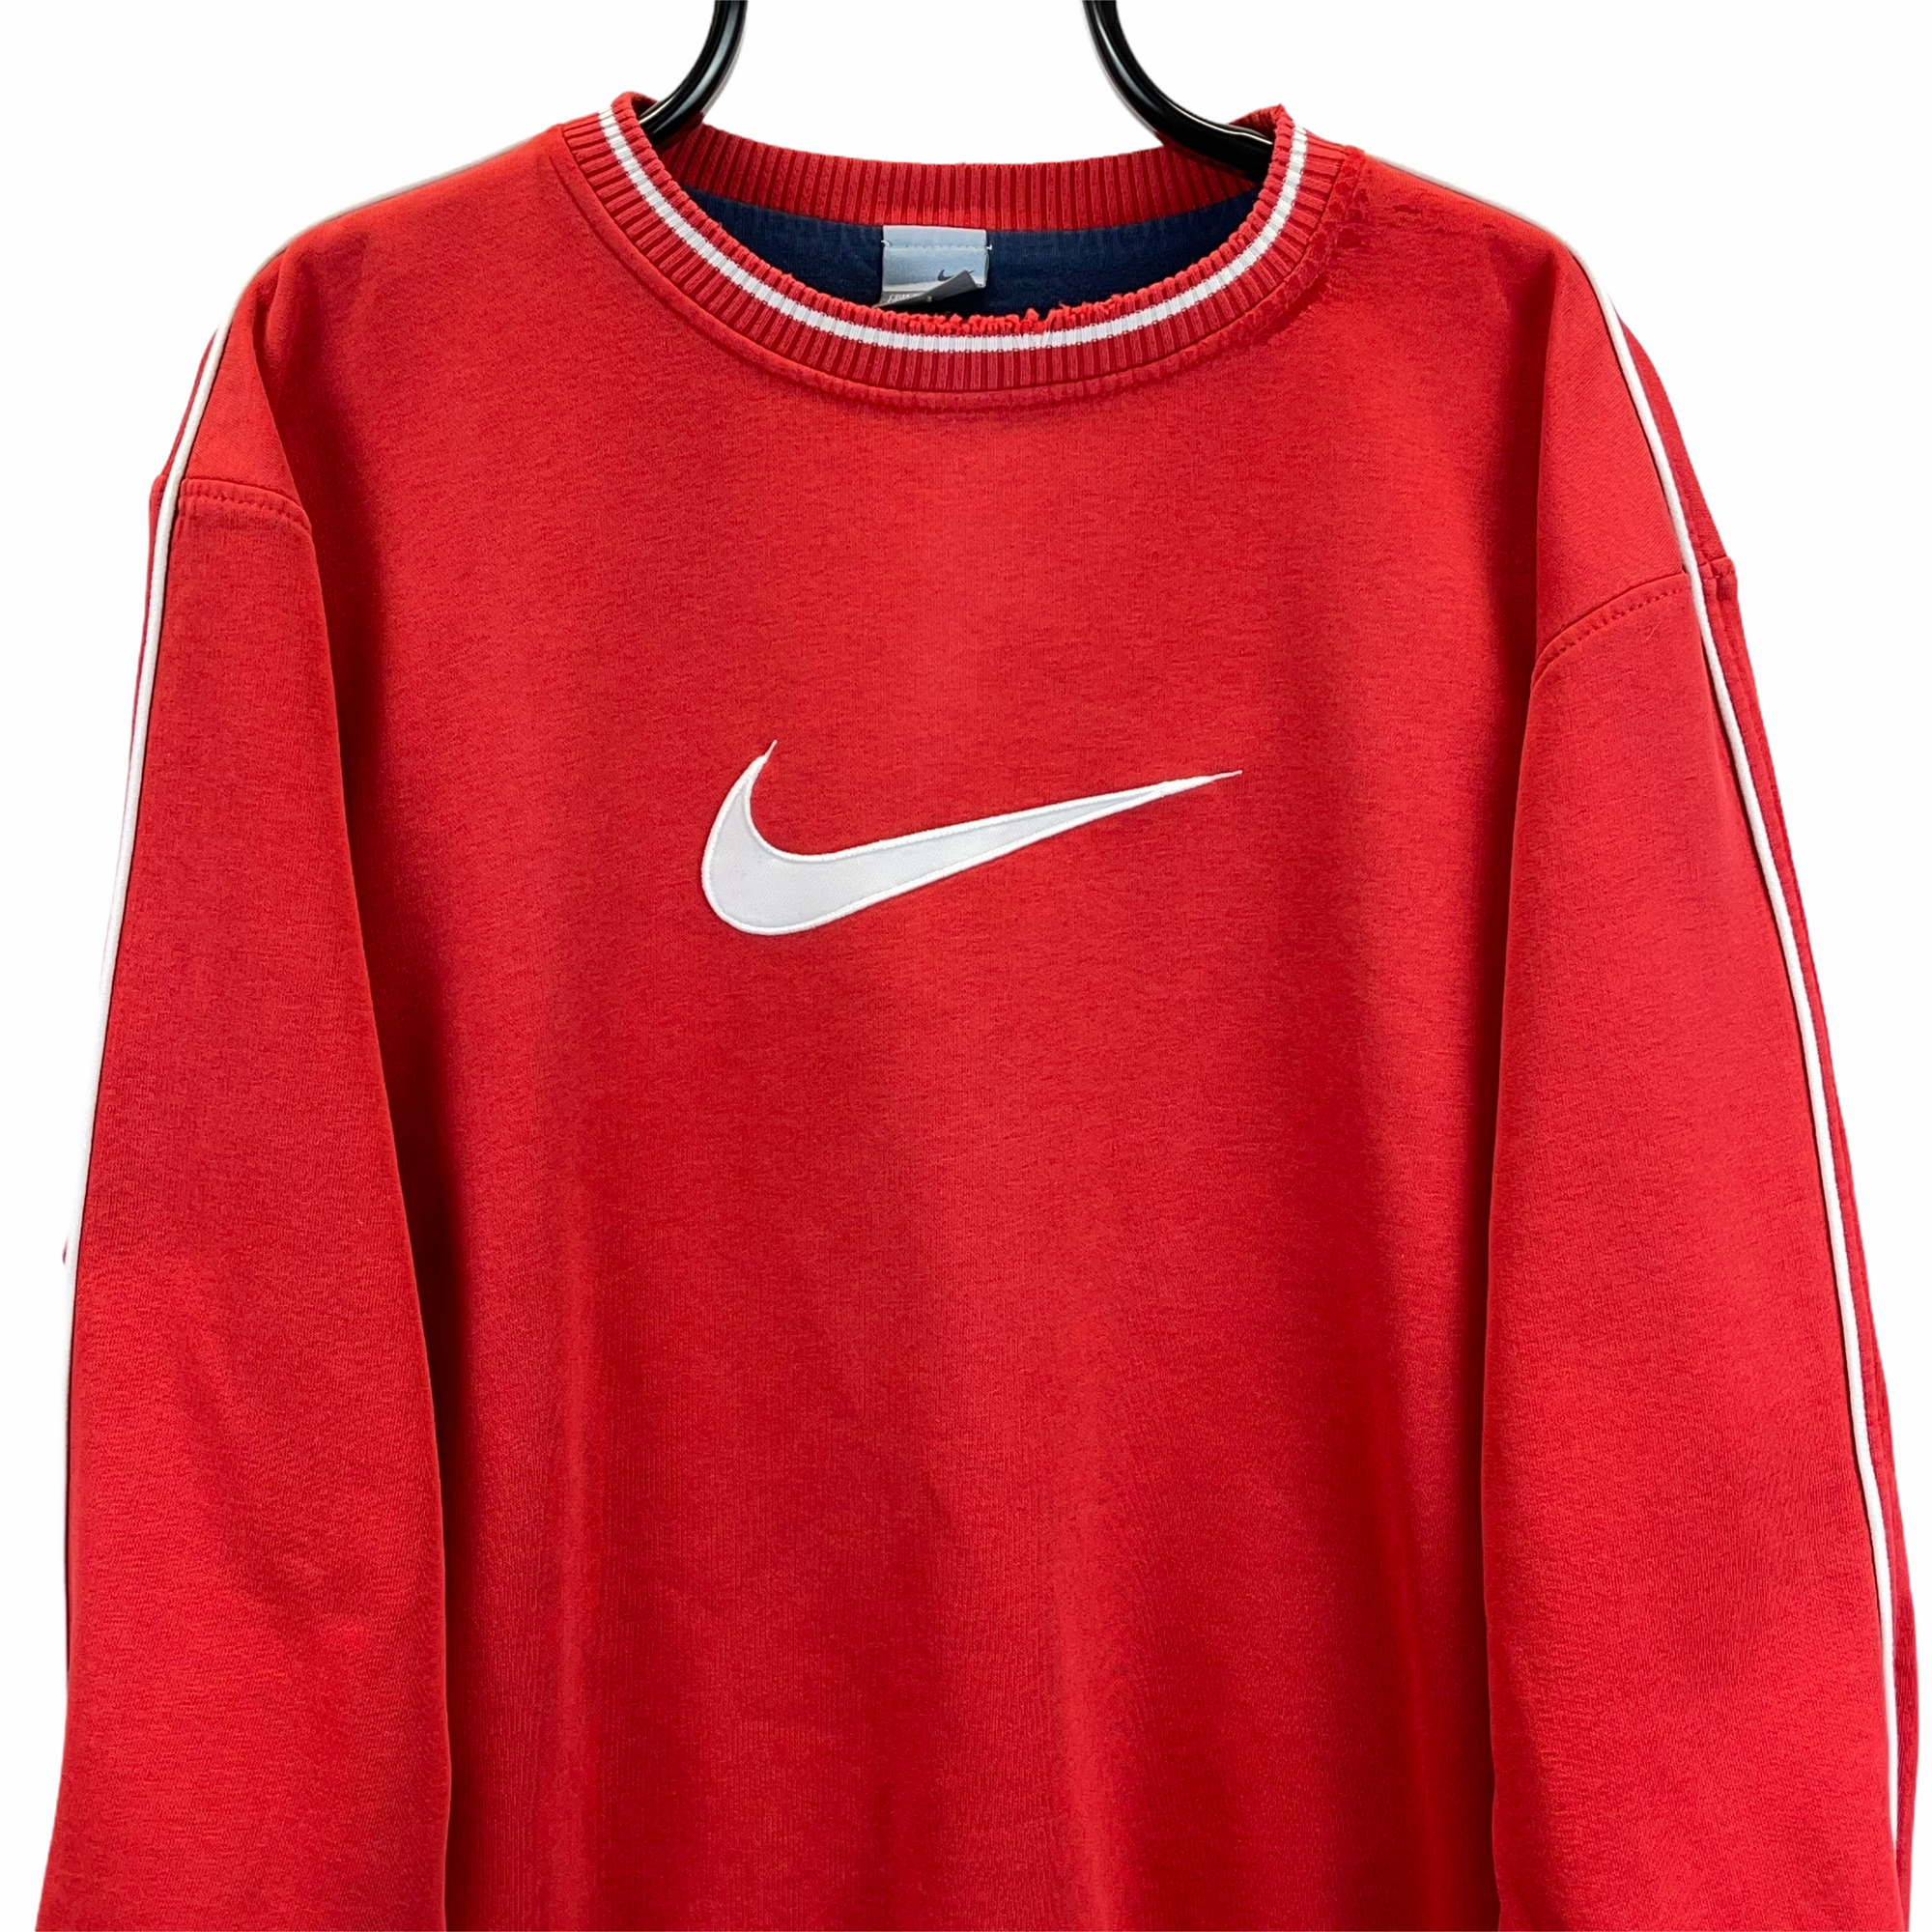 Vintage Nike Big Swoosh Sweatshirt in Red - Men's Large/Women's XL